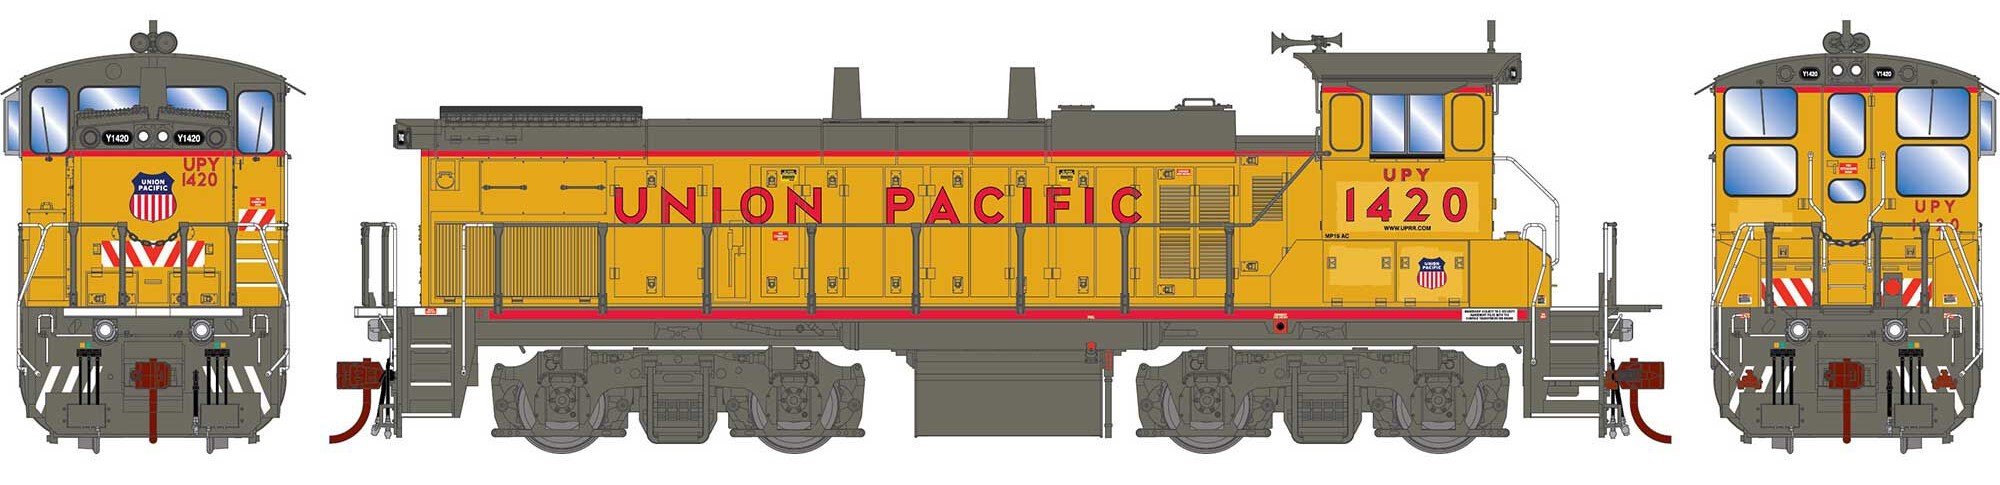 Athearn Genesis 2.0 HO ATHG74525 DCC Ready EMD MP15AC Locomotive Union Pacific UPY #1420